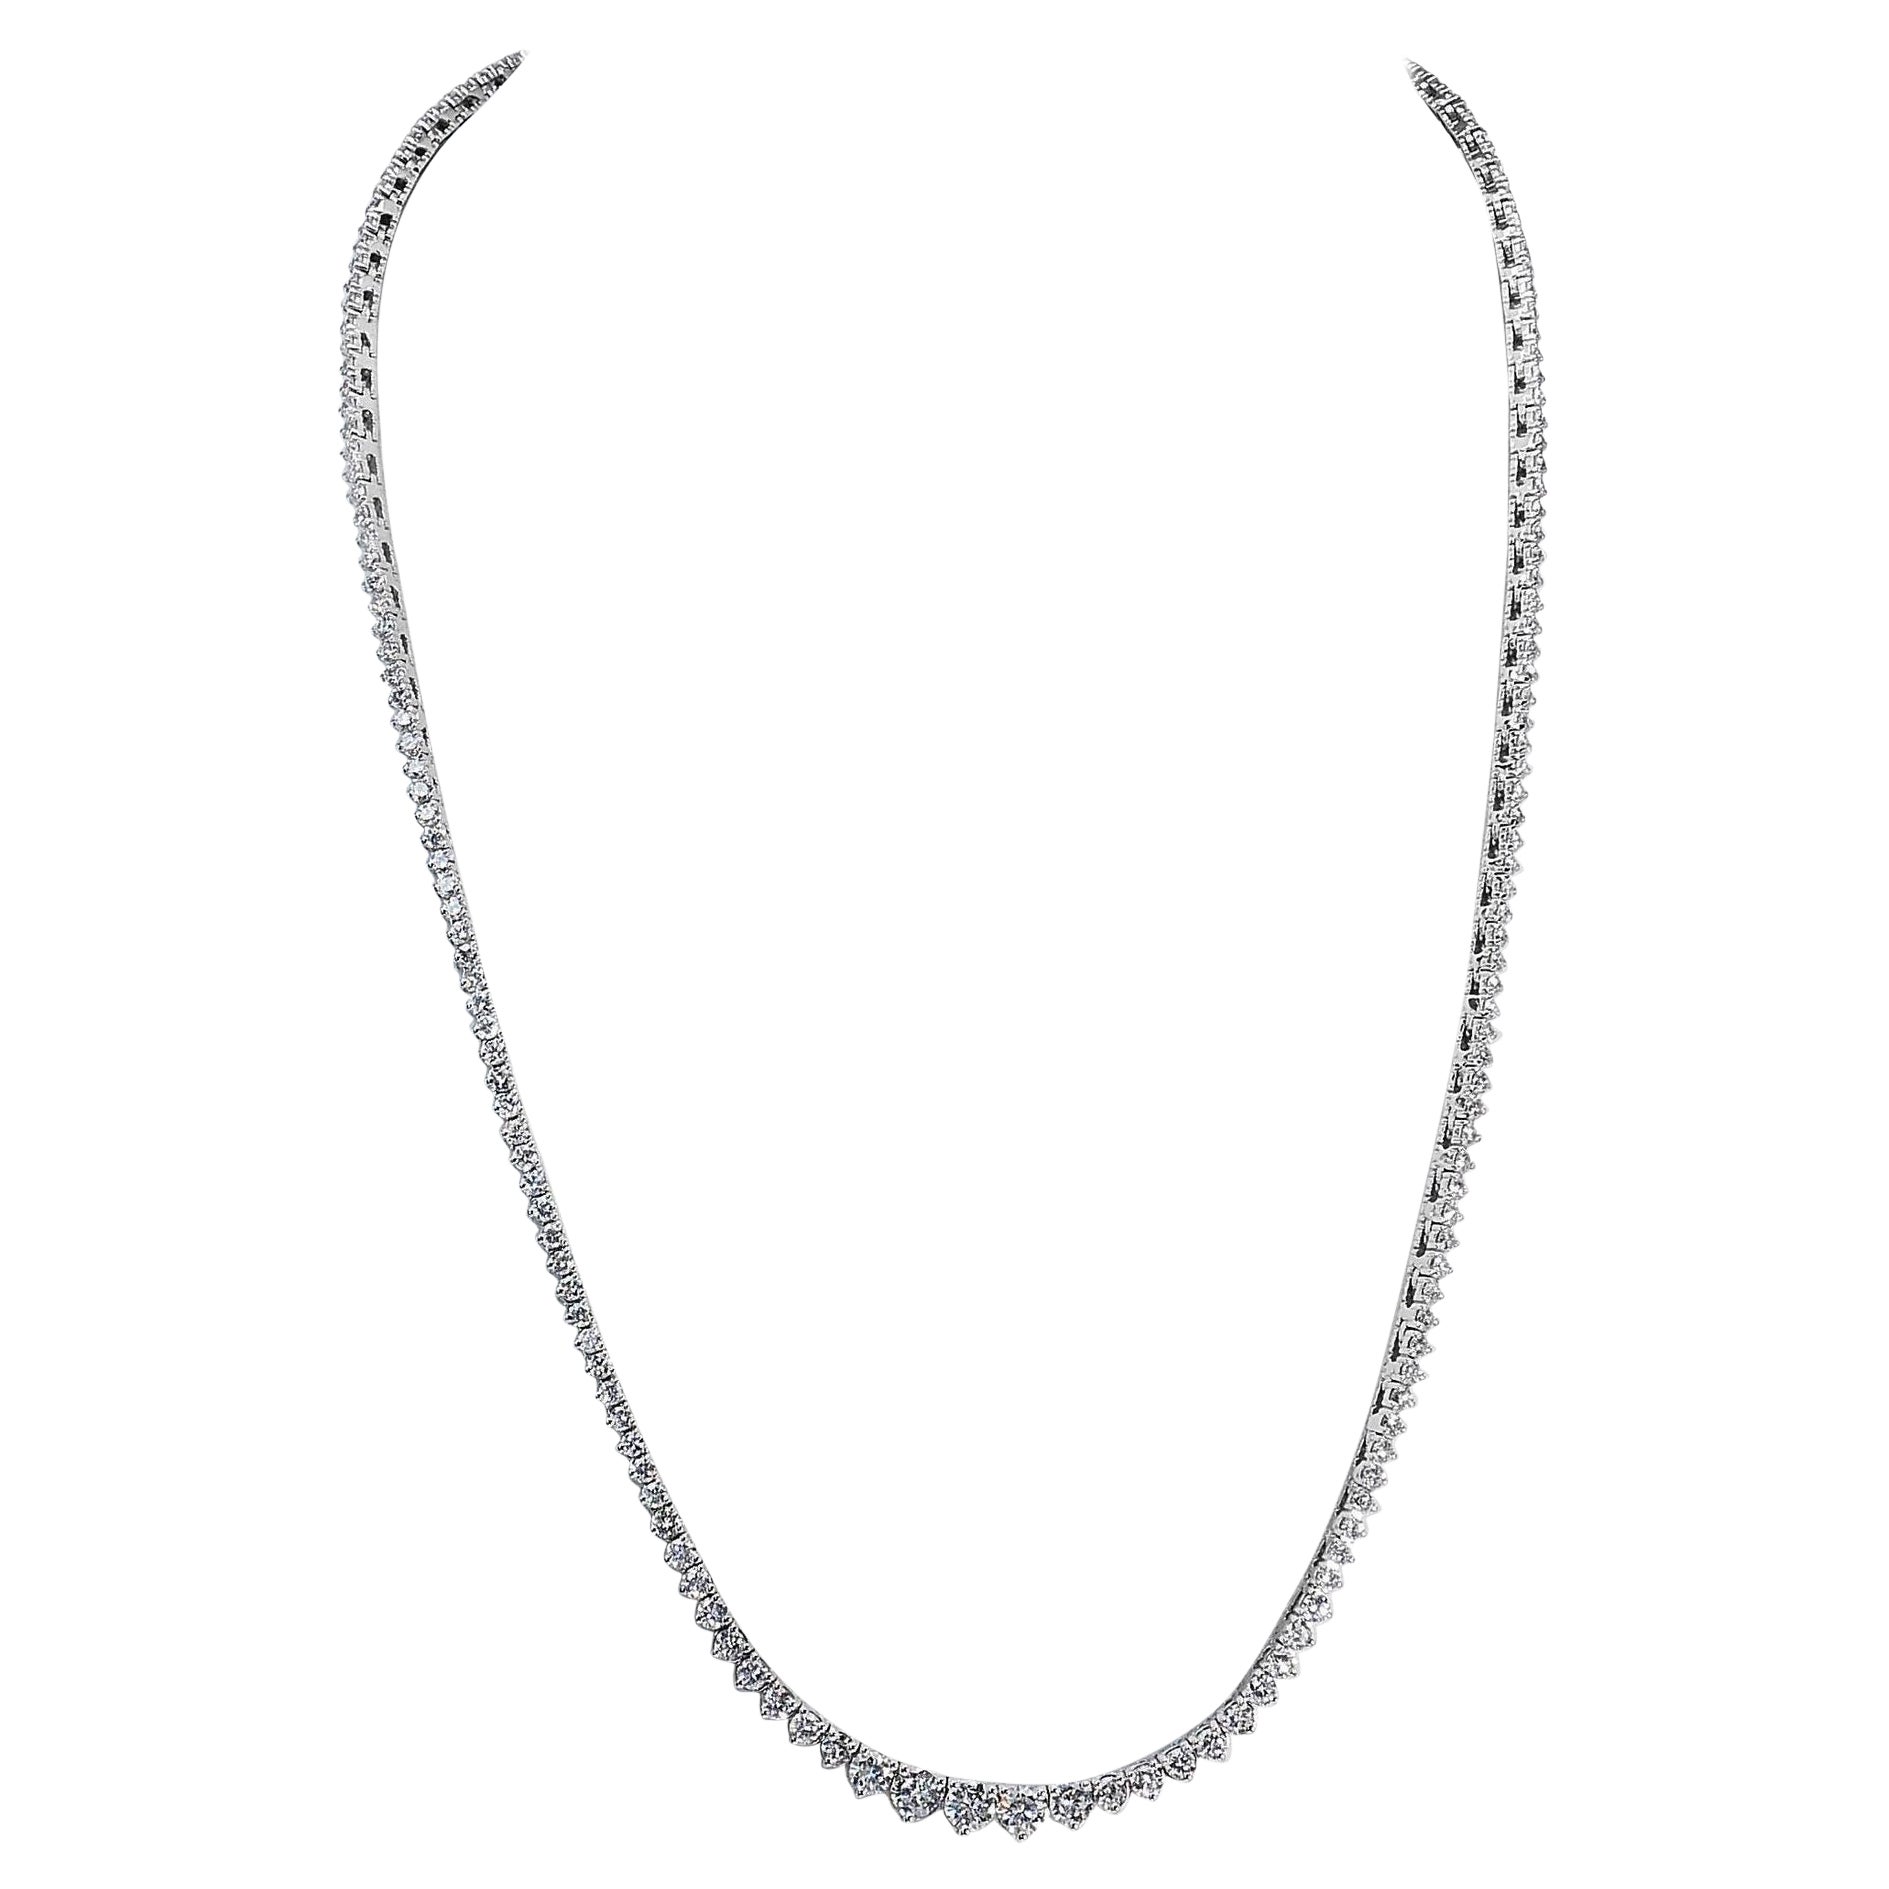 Ravishing 18k White Gold Necklace w/ 5.78 ct Natural Diamonds IGI Certificate